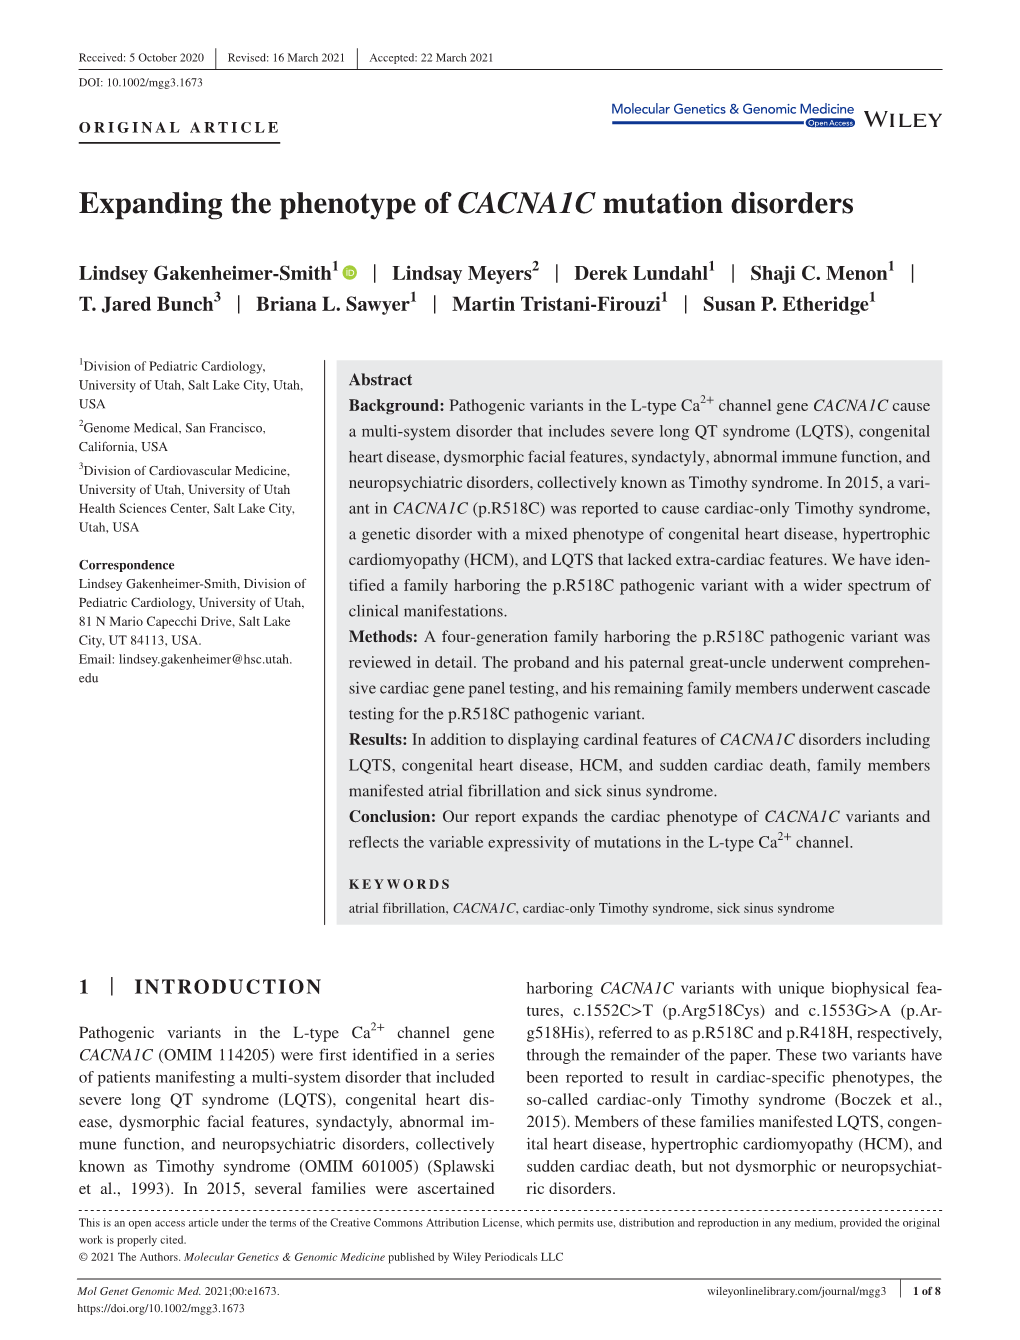 Expanding the Phenotype of CACNA1C Mutation Disorders